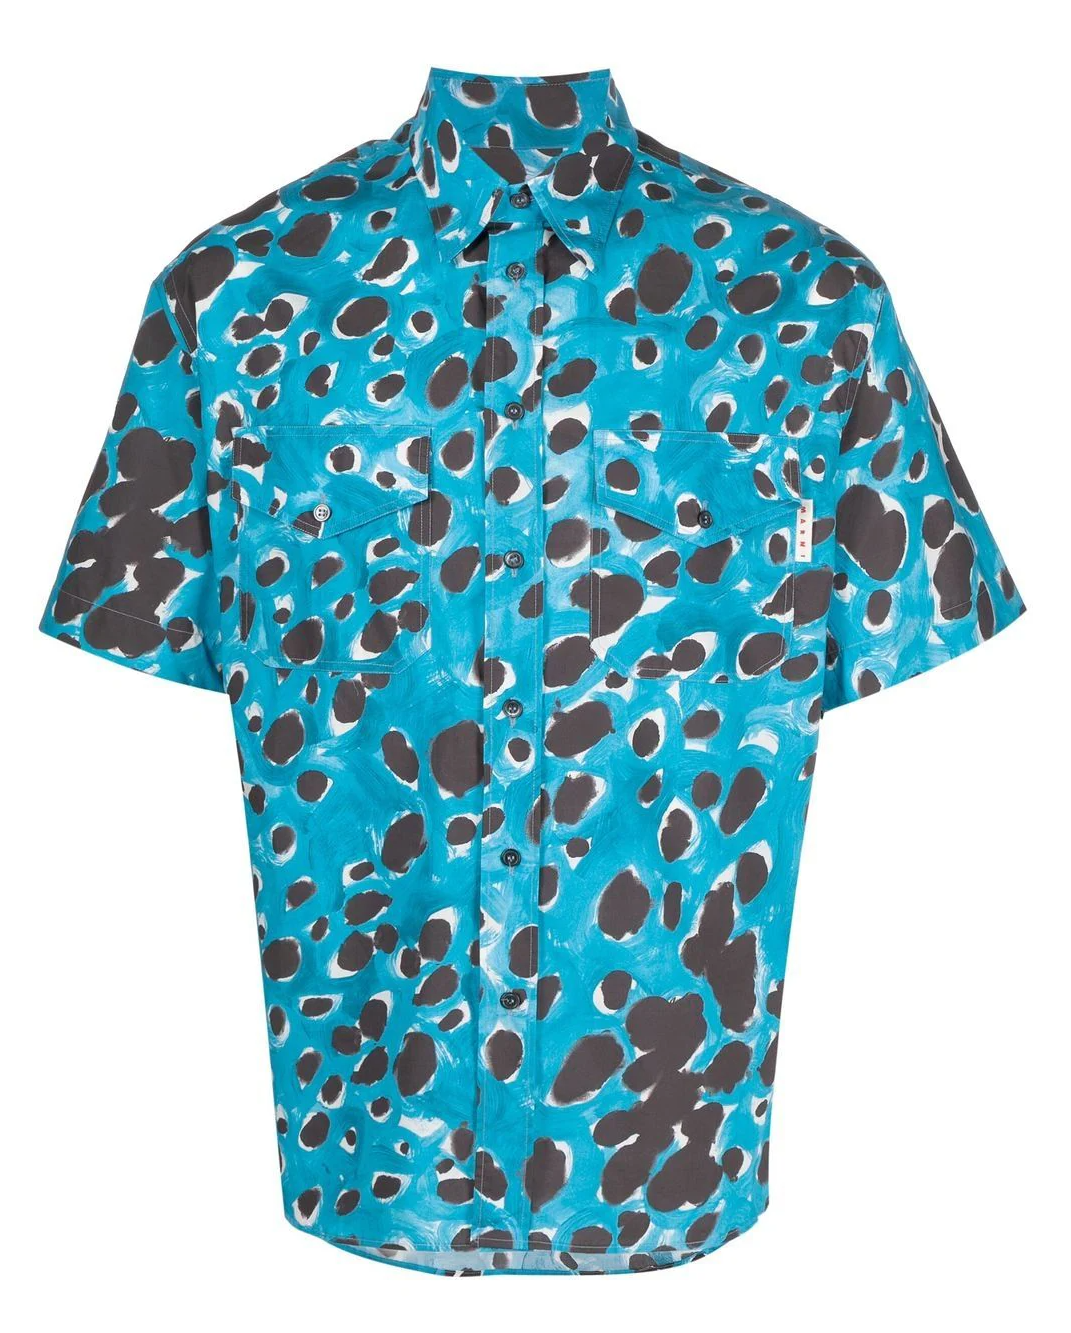 Marni 'Paint Dots' Blue Button Shirt